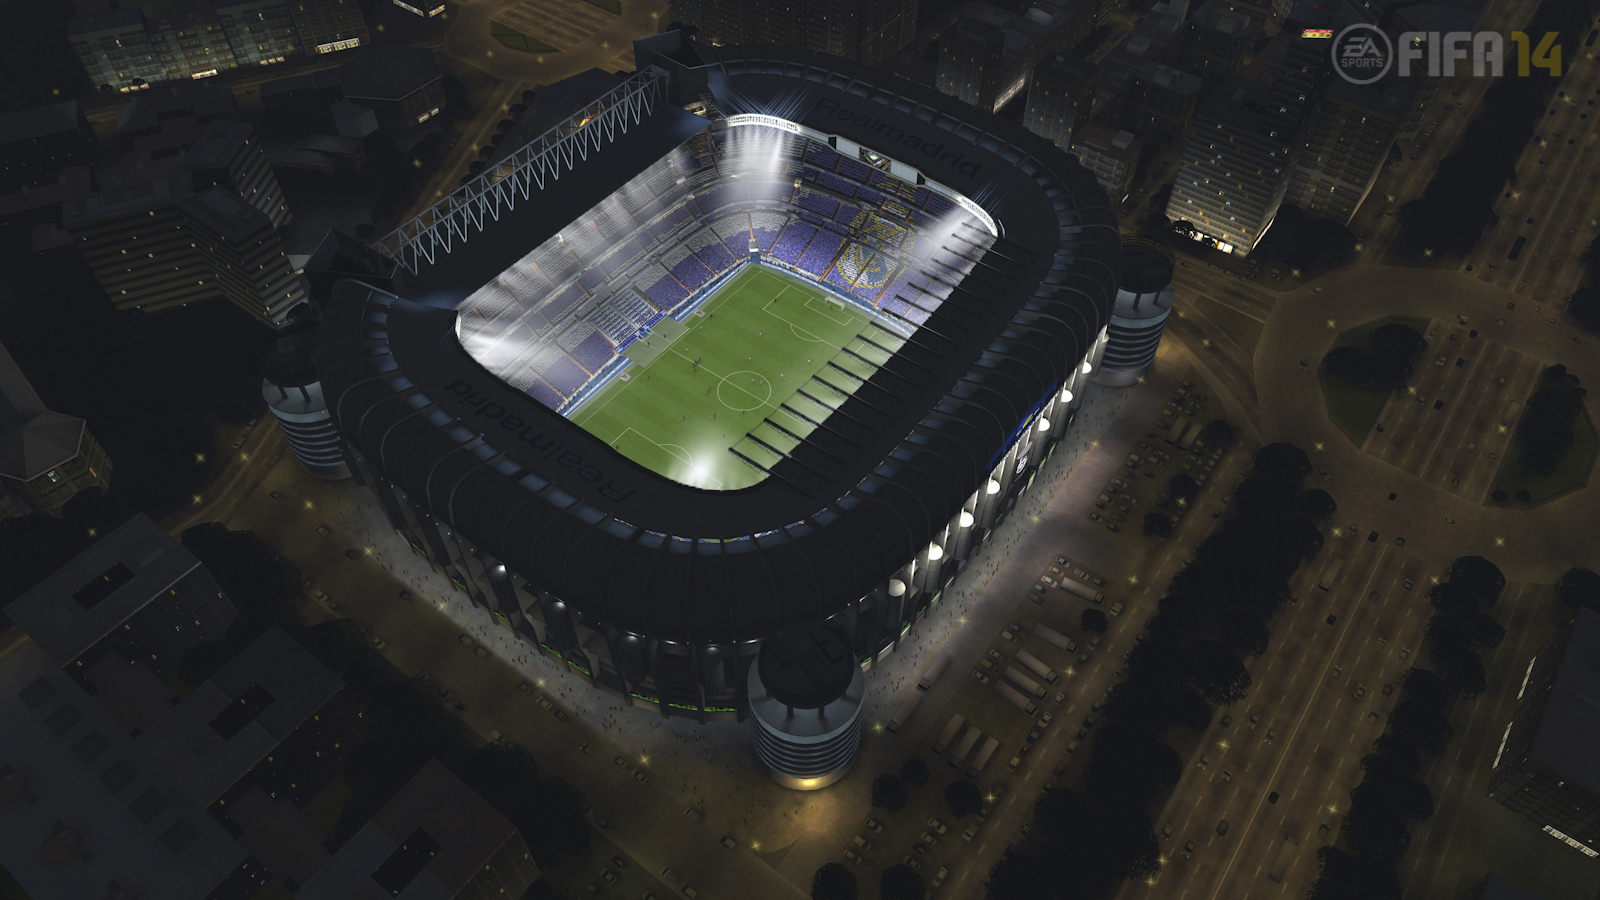 eFootball 2023 Stadiums – FIFPlay